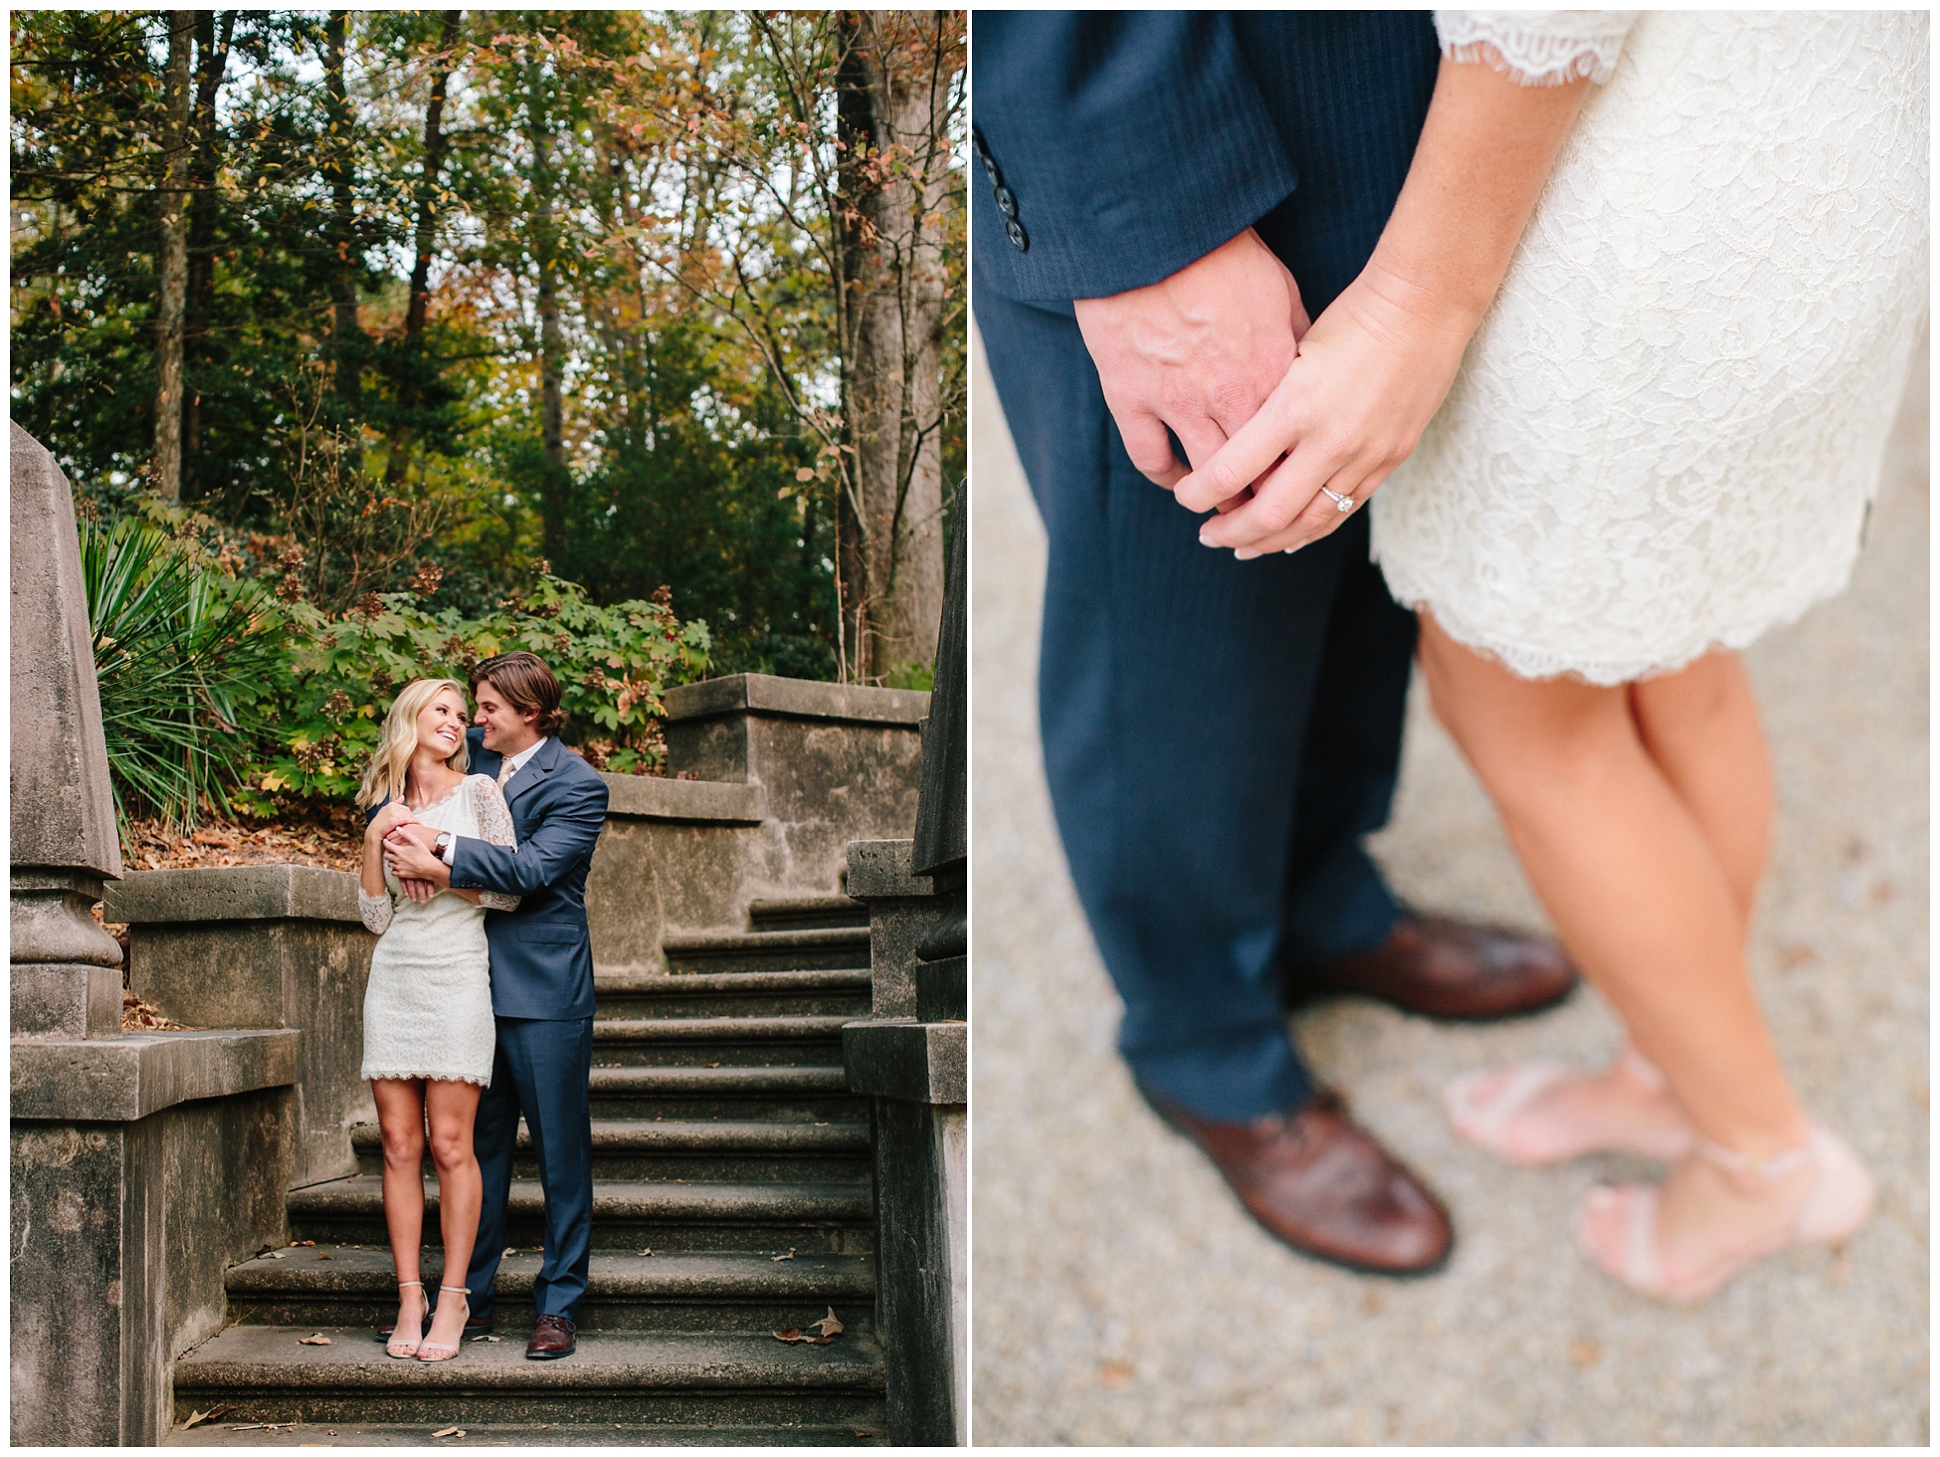 5 Reasons You Should Make an Engagement Session Happen | Atlanta, Georgia Wedding Photographers | Swan House Engagement Session | Two Chics Photography | www.twochicsphotography.com